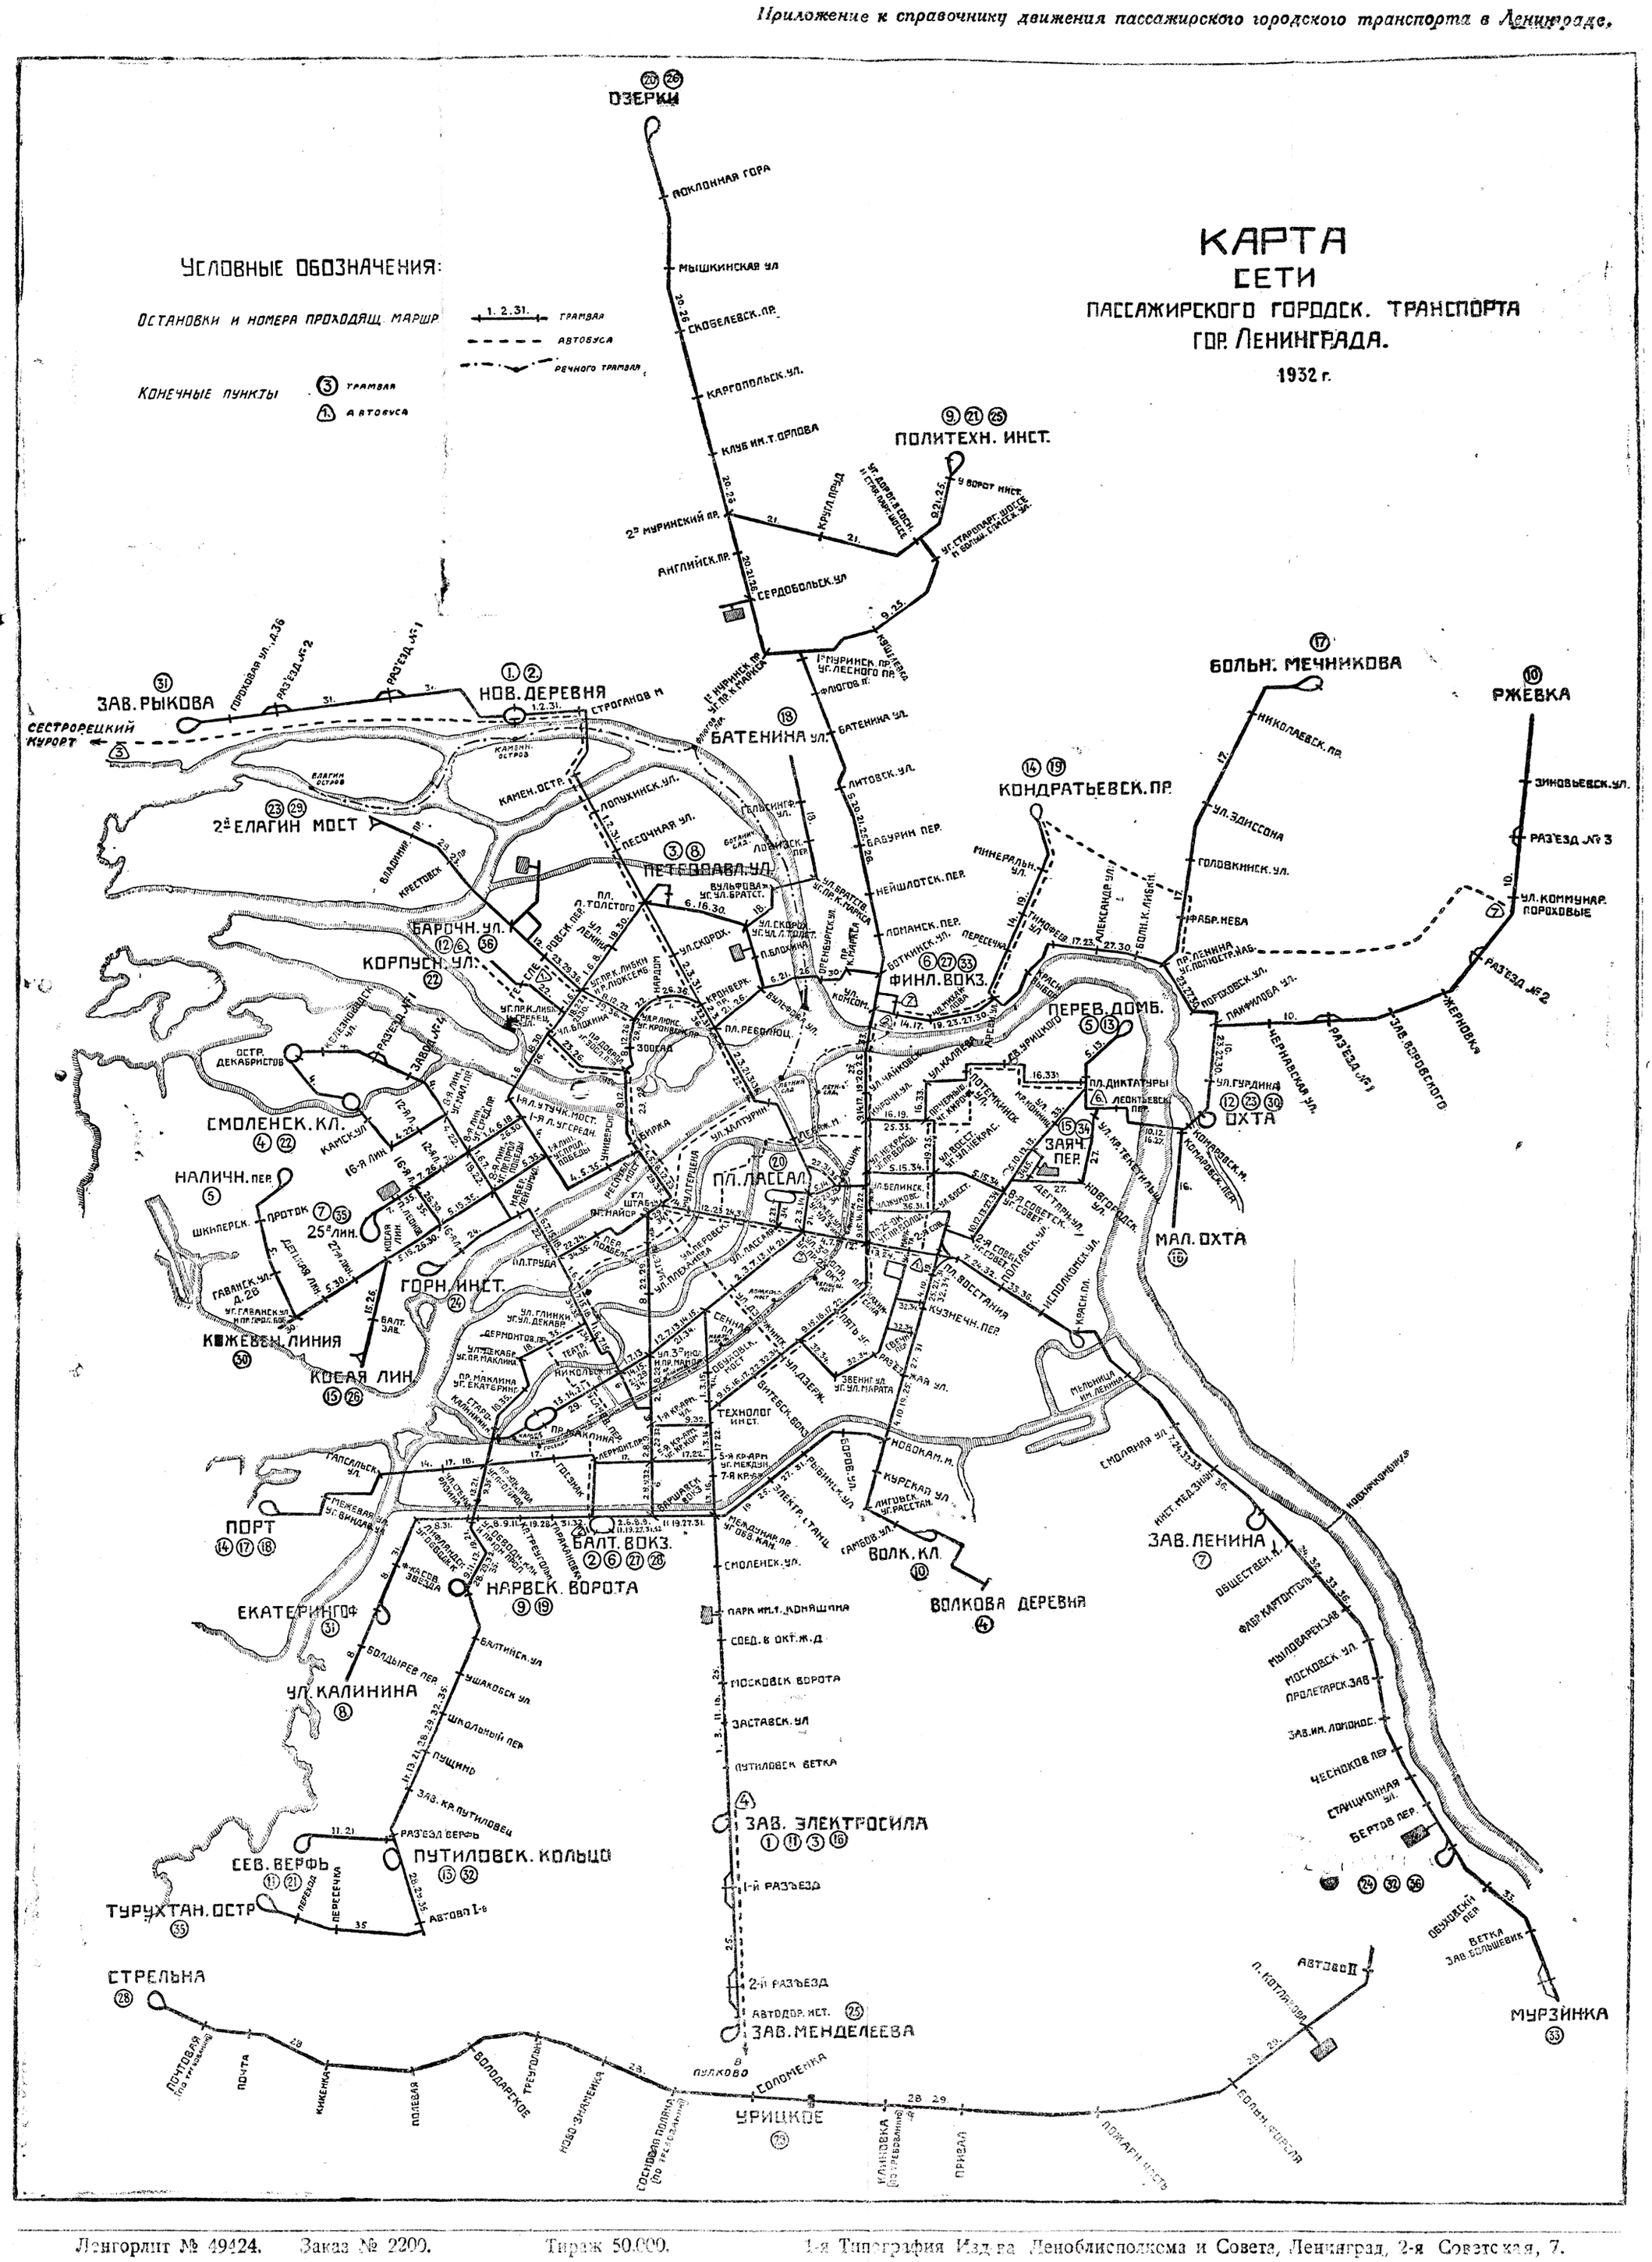 Saint-Petersburg — System-wide Maps